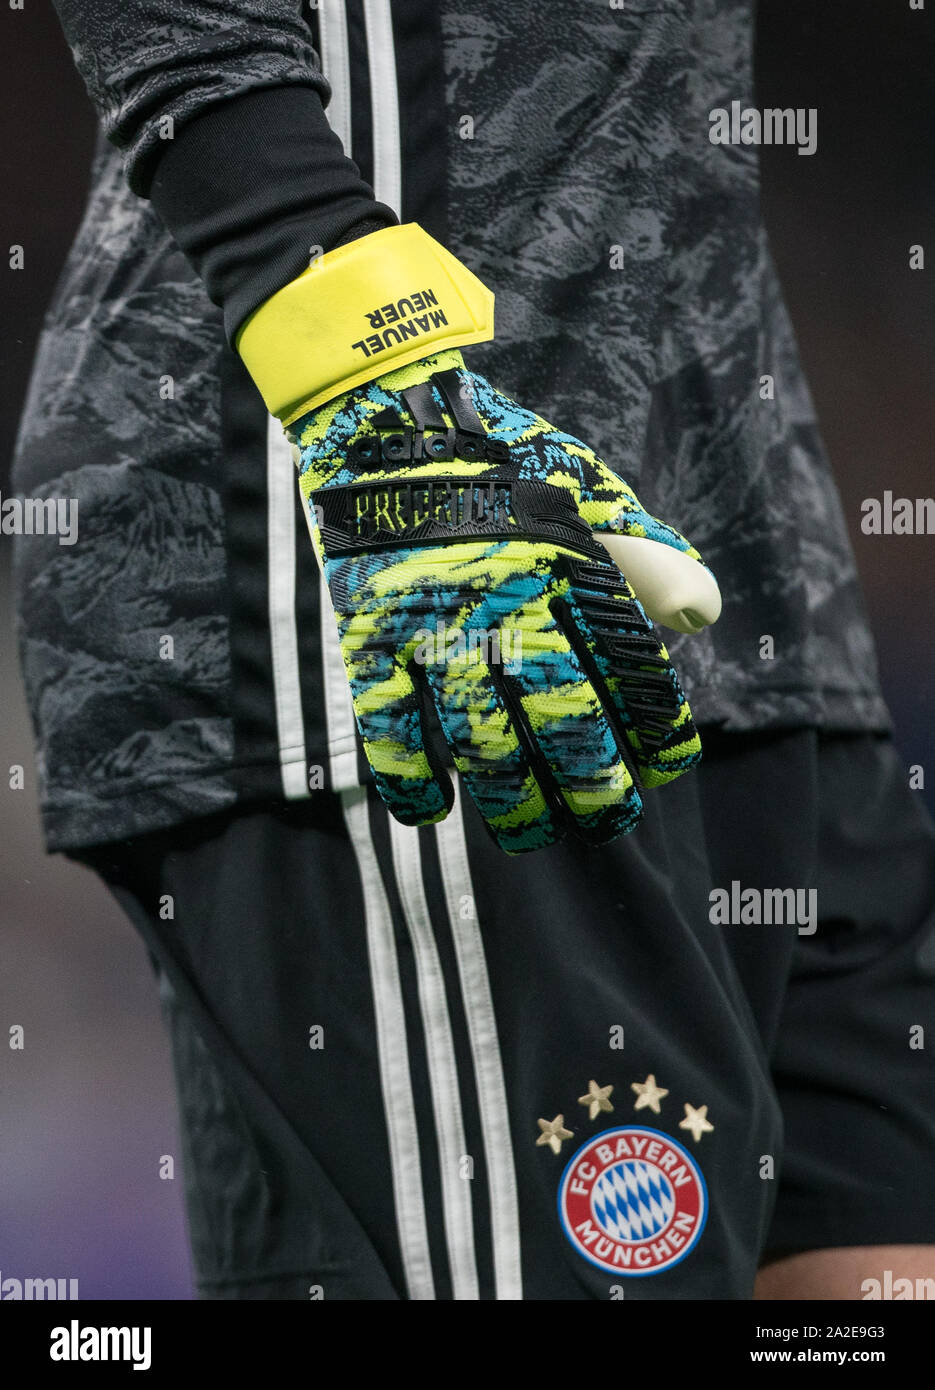 London, UK. 01st Oct, 2019. The Adidas Predator goalkeeping glove of  Goalkeeper Manuel Neuer of Bayern Munich during the UEFA Champions League  group match between Tottenham Hotspur and Bayern Munich at Wembley